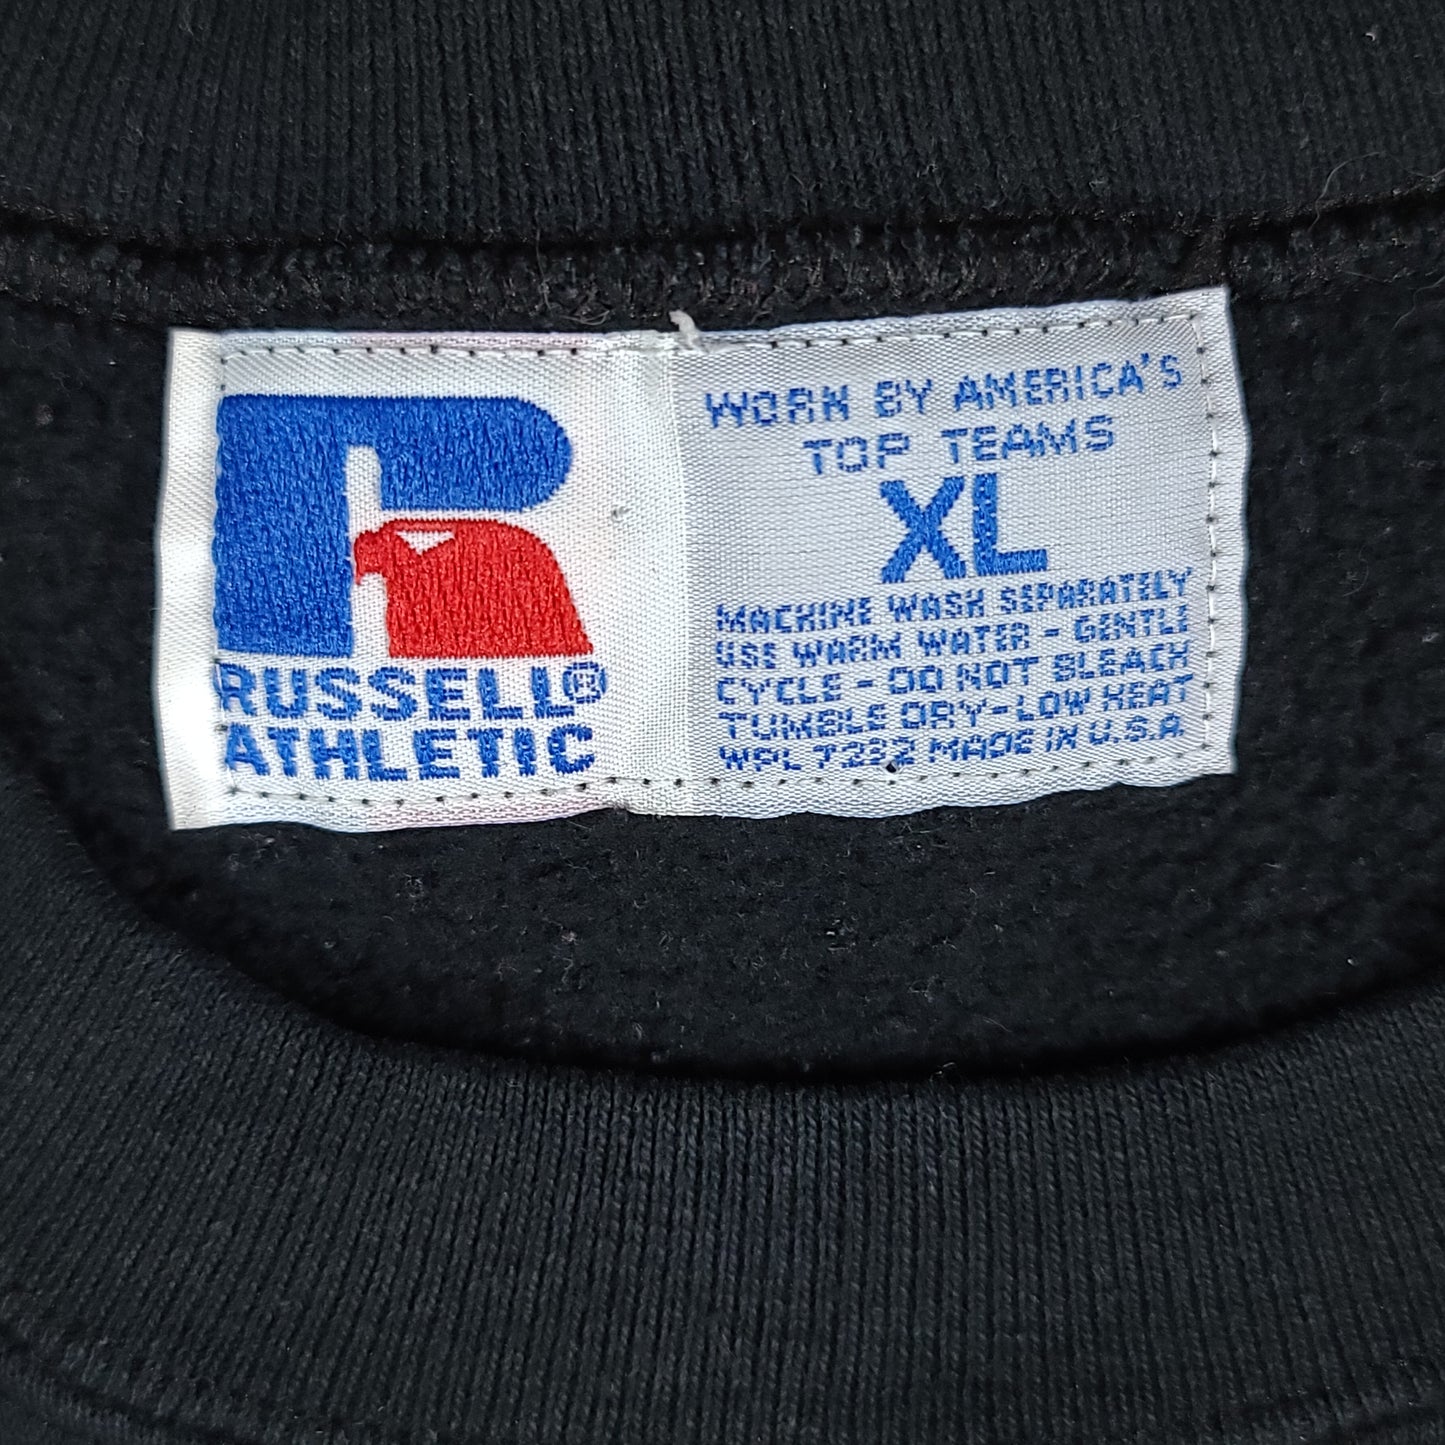 Vintage Los Angeles Raiders NFL Russell Athletic Sweatshirt